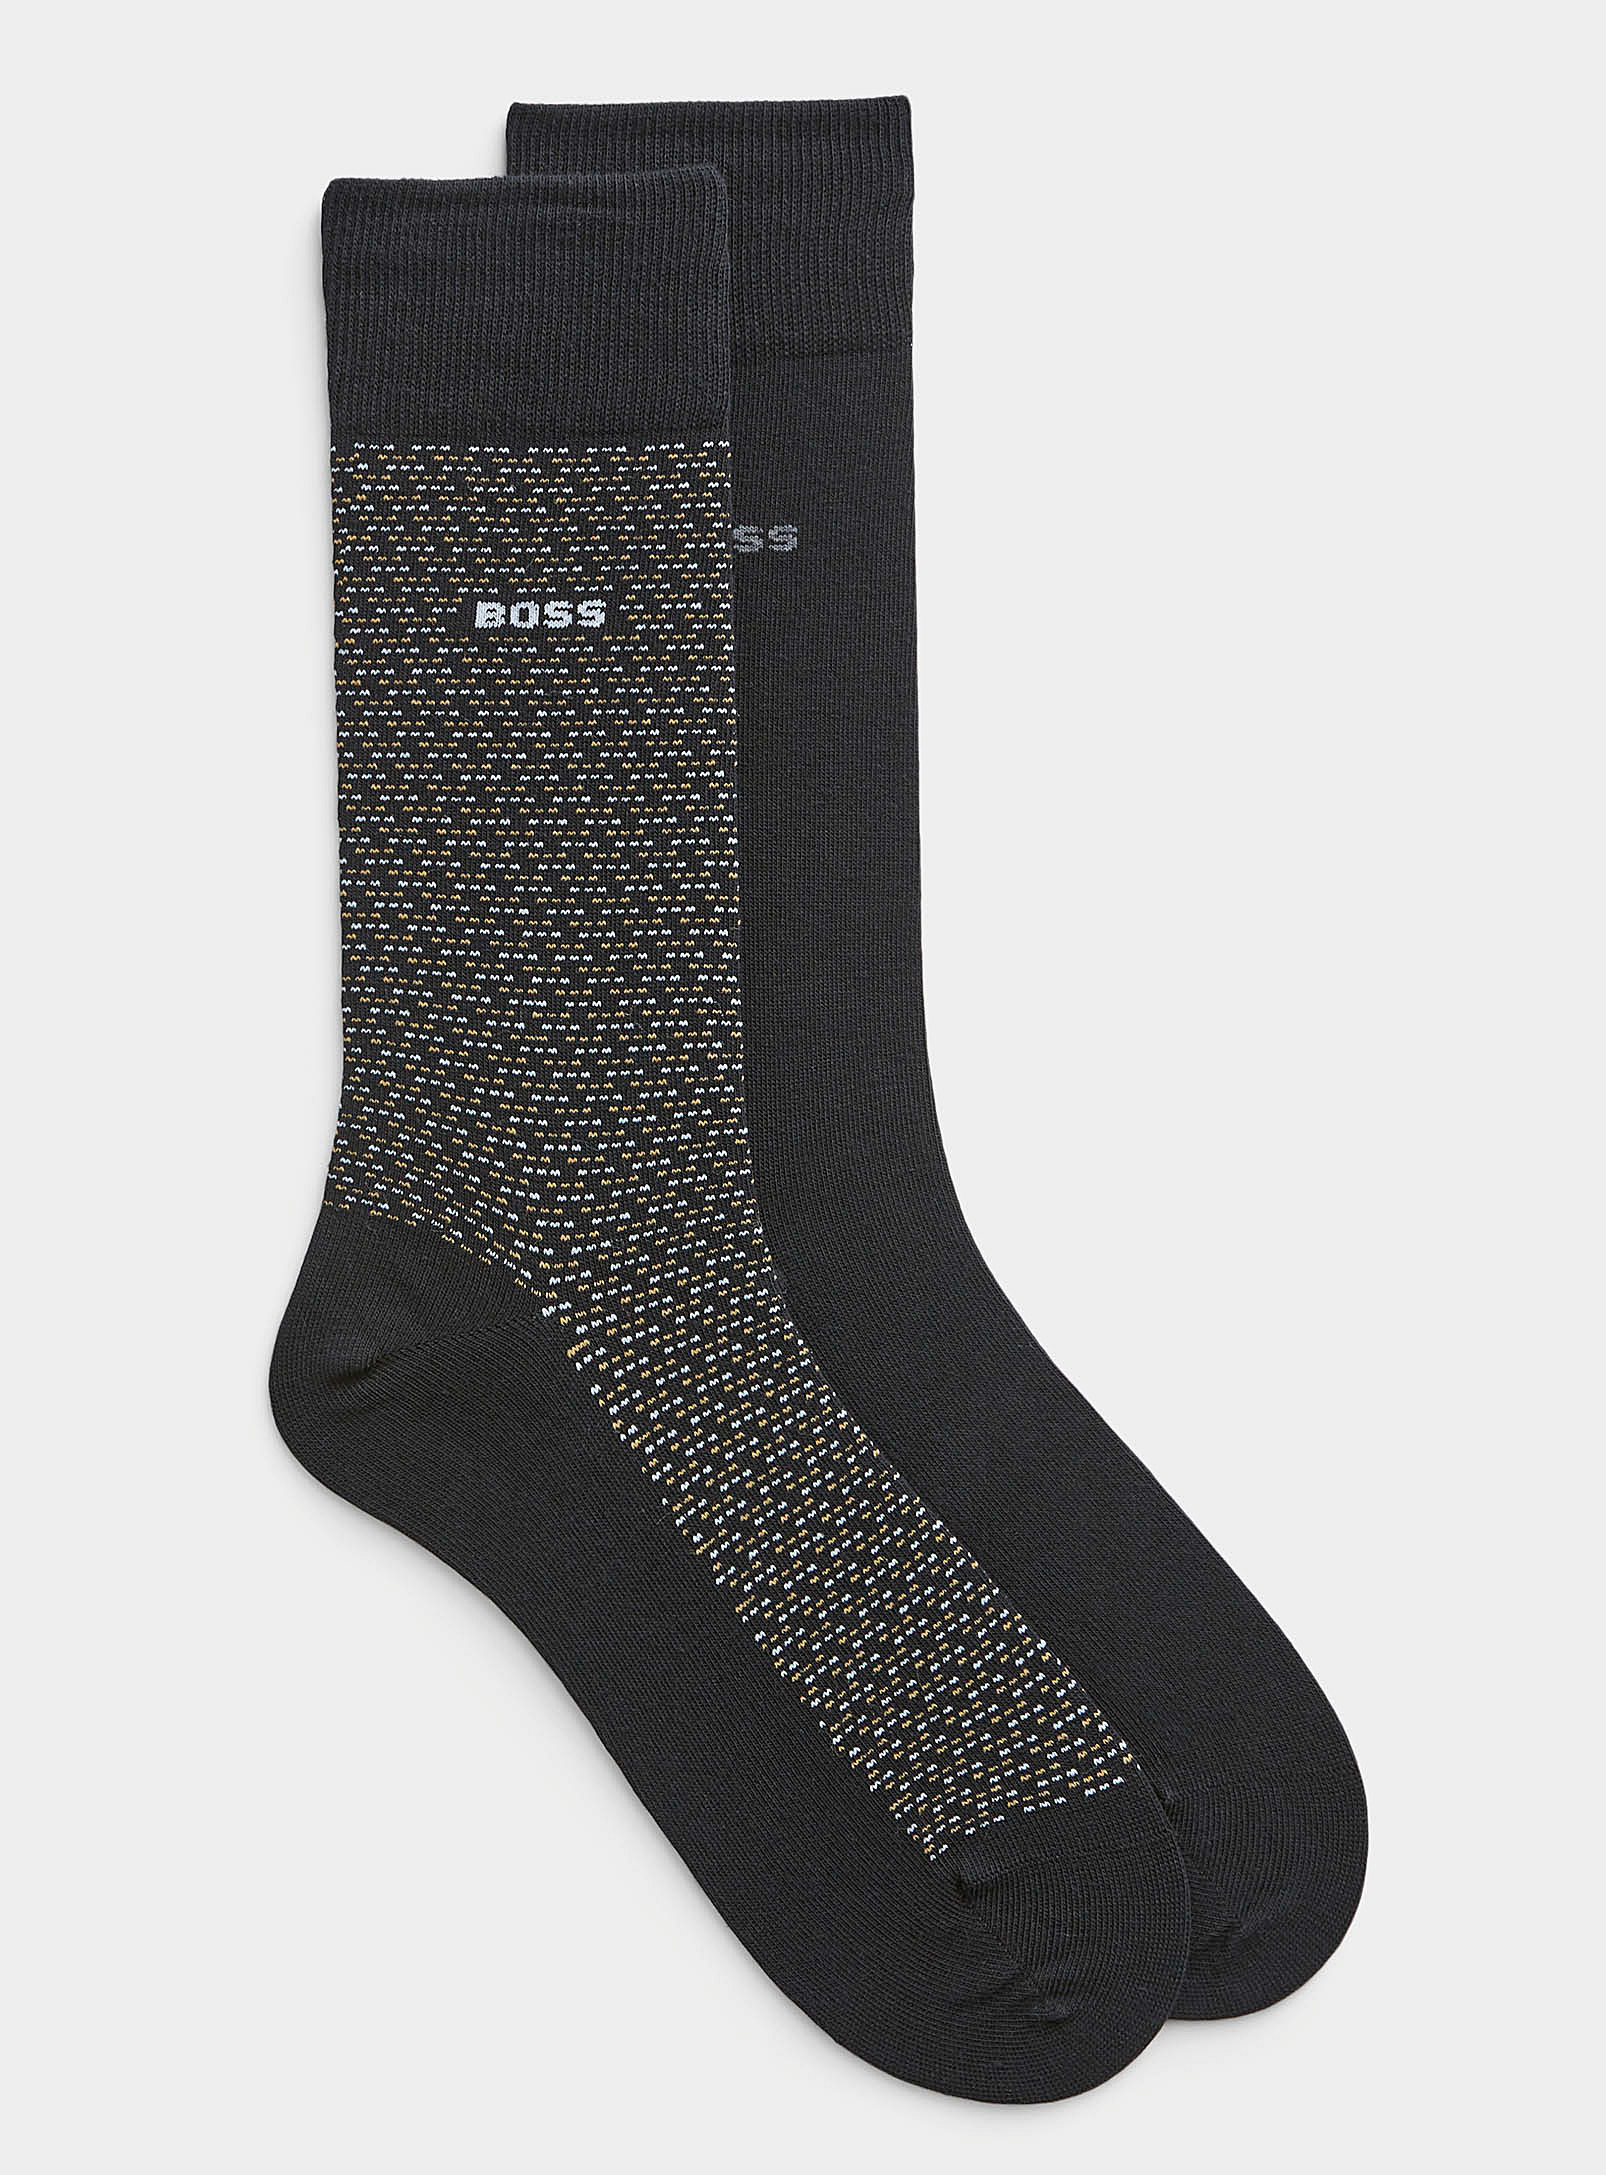 Hugo Boss Solid And Flecked Socks 2-pack In Black